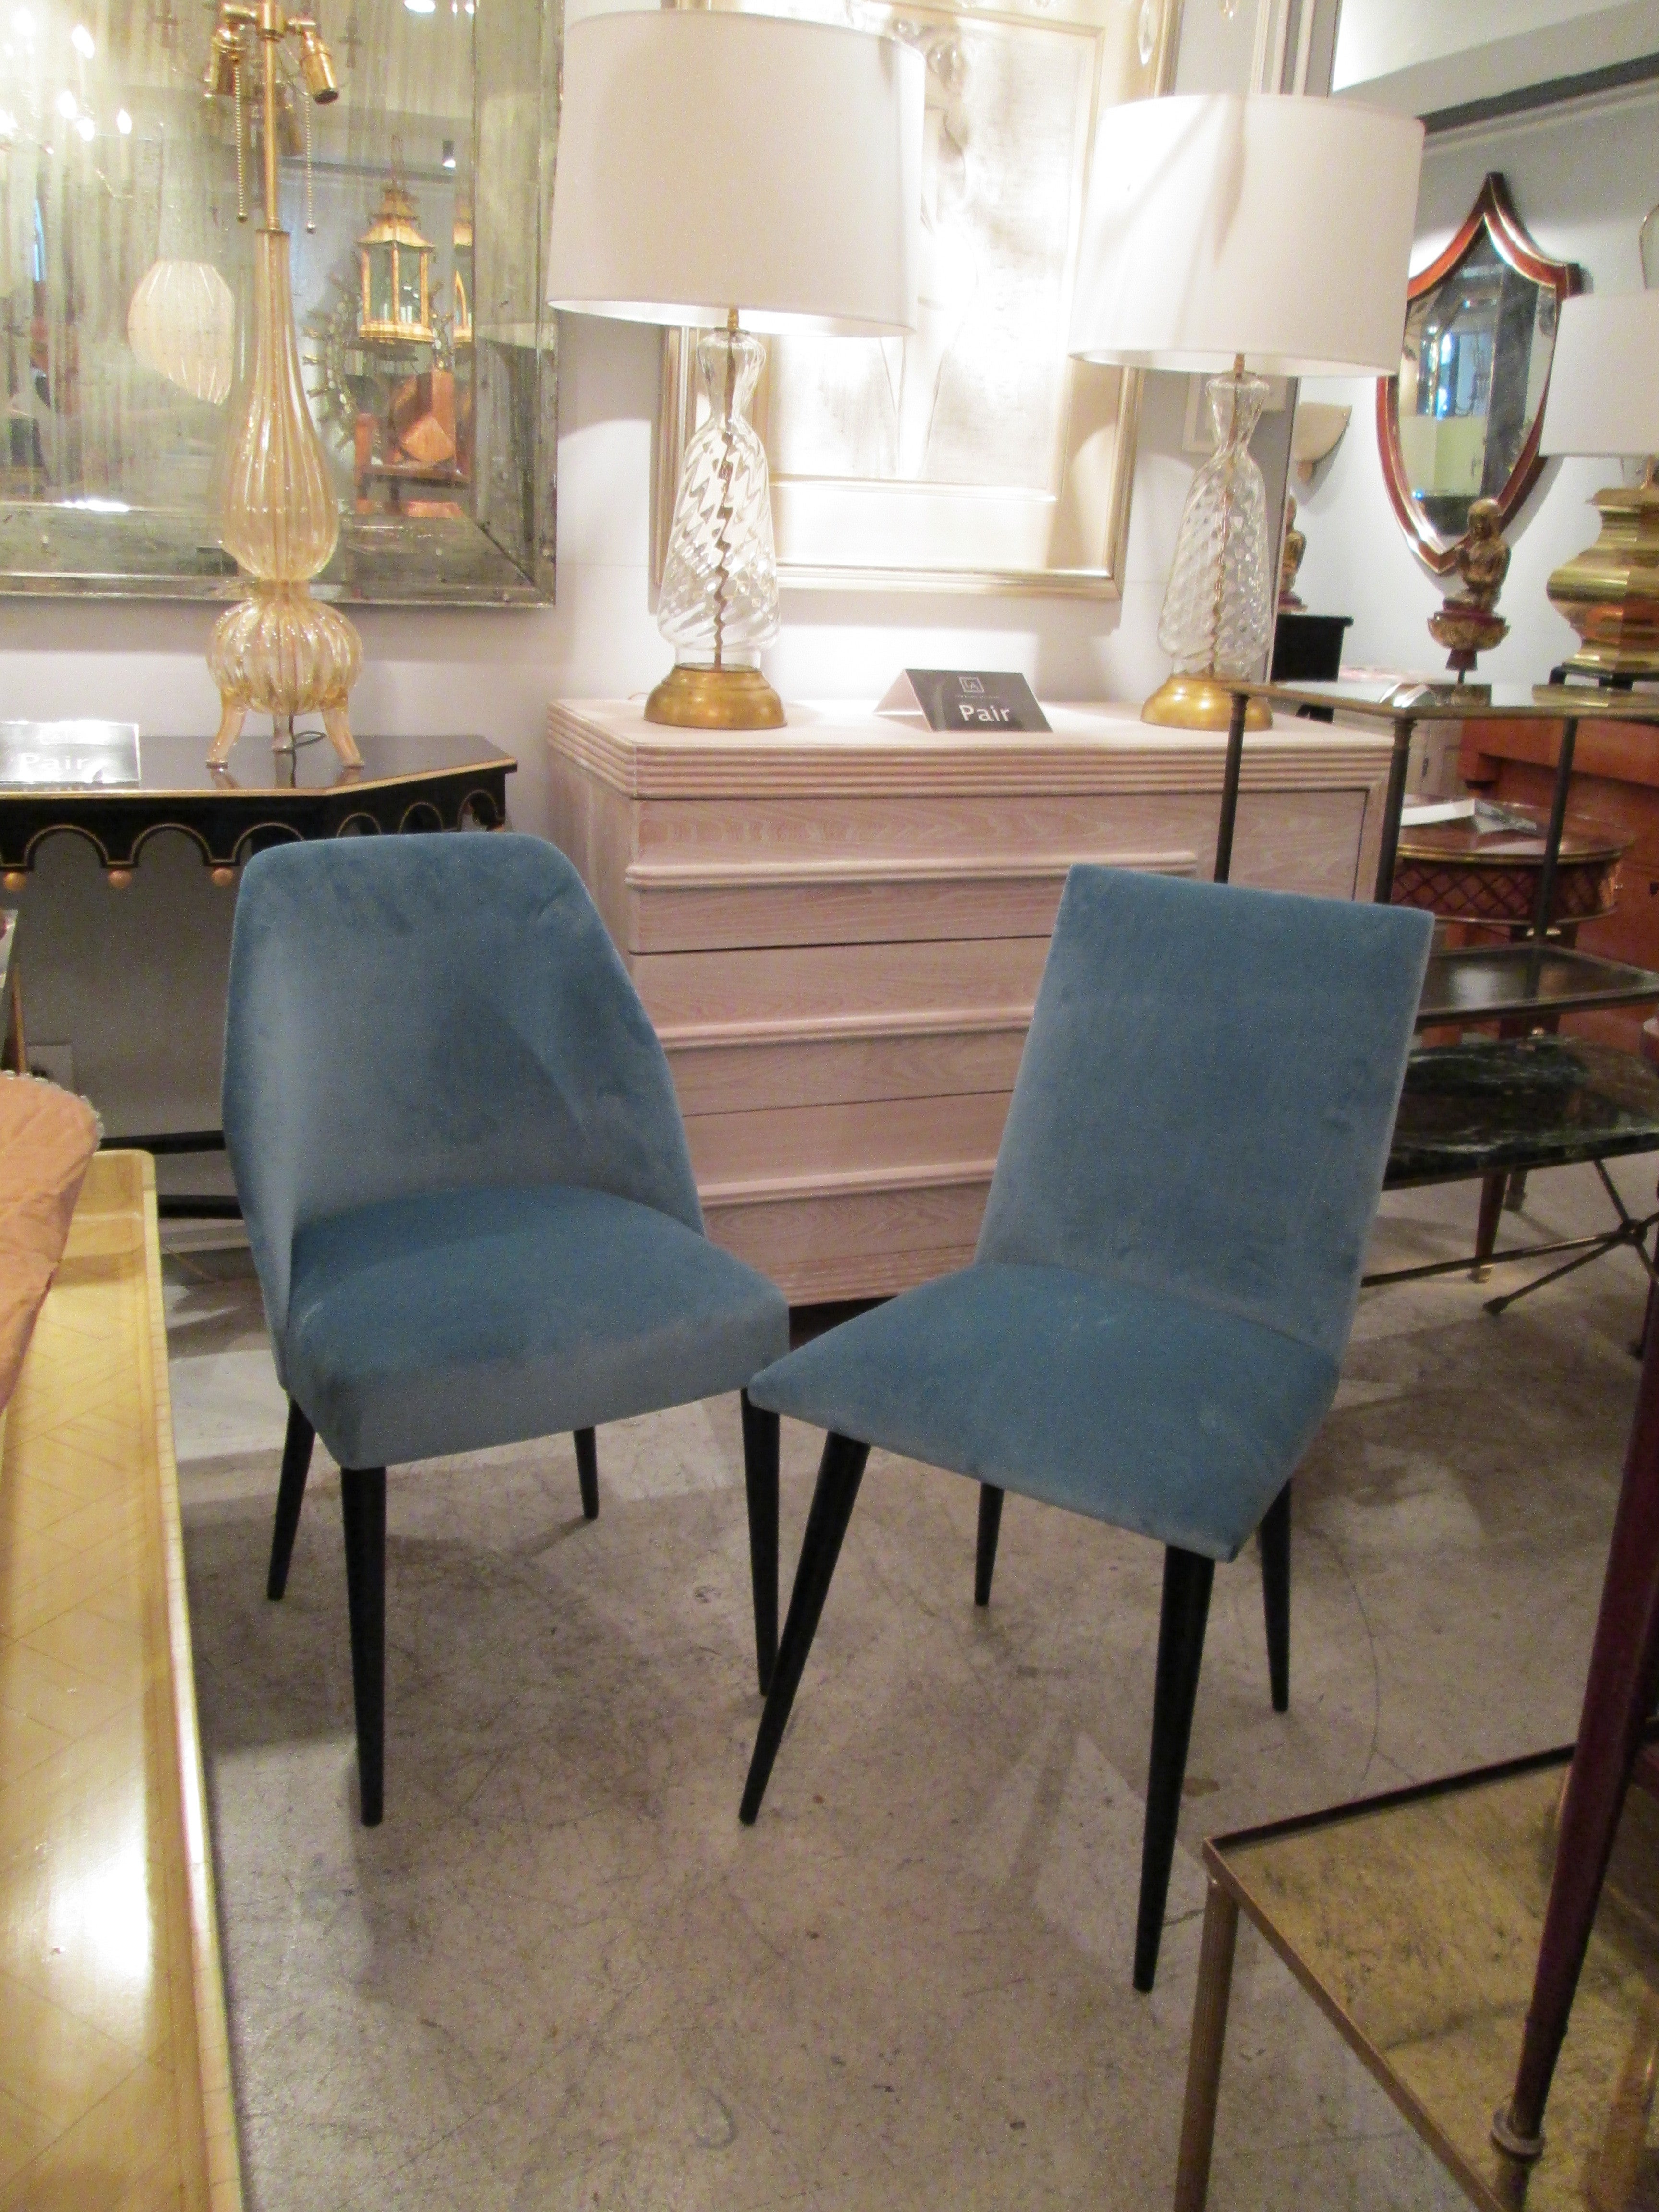 Pair of Italian Mid-Century Modern Chairs